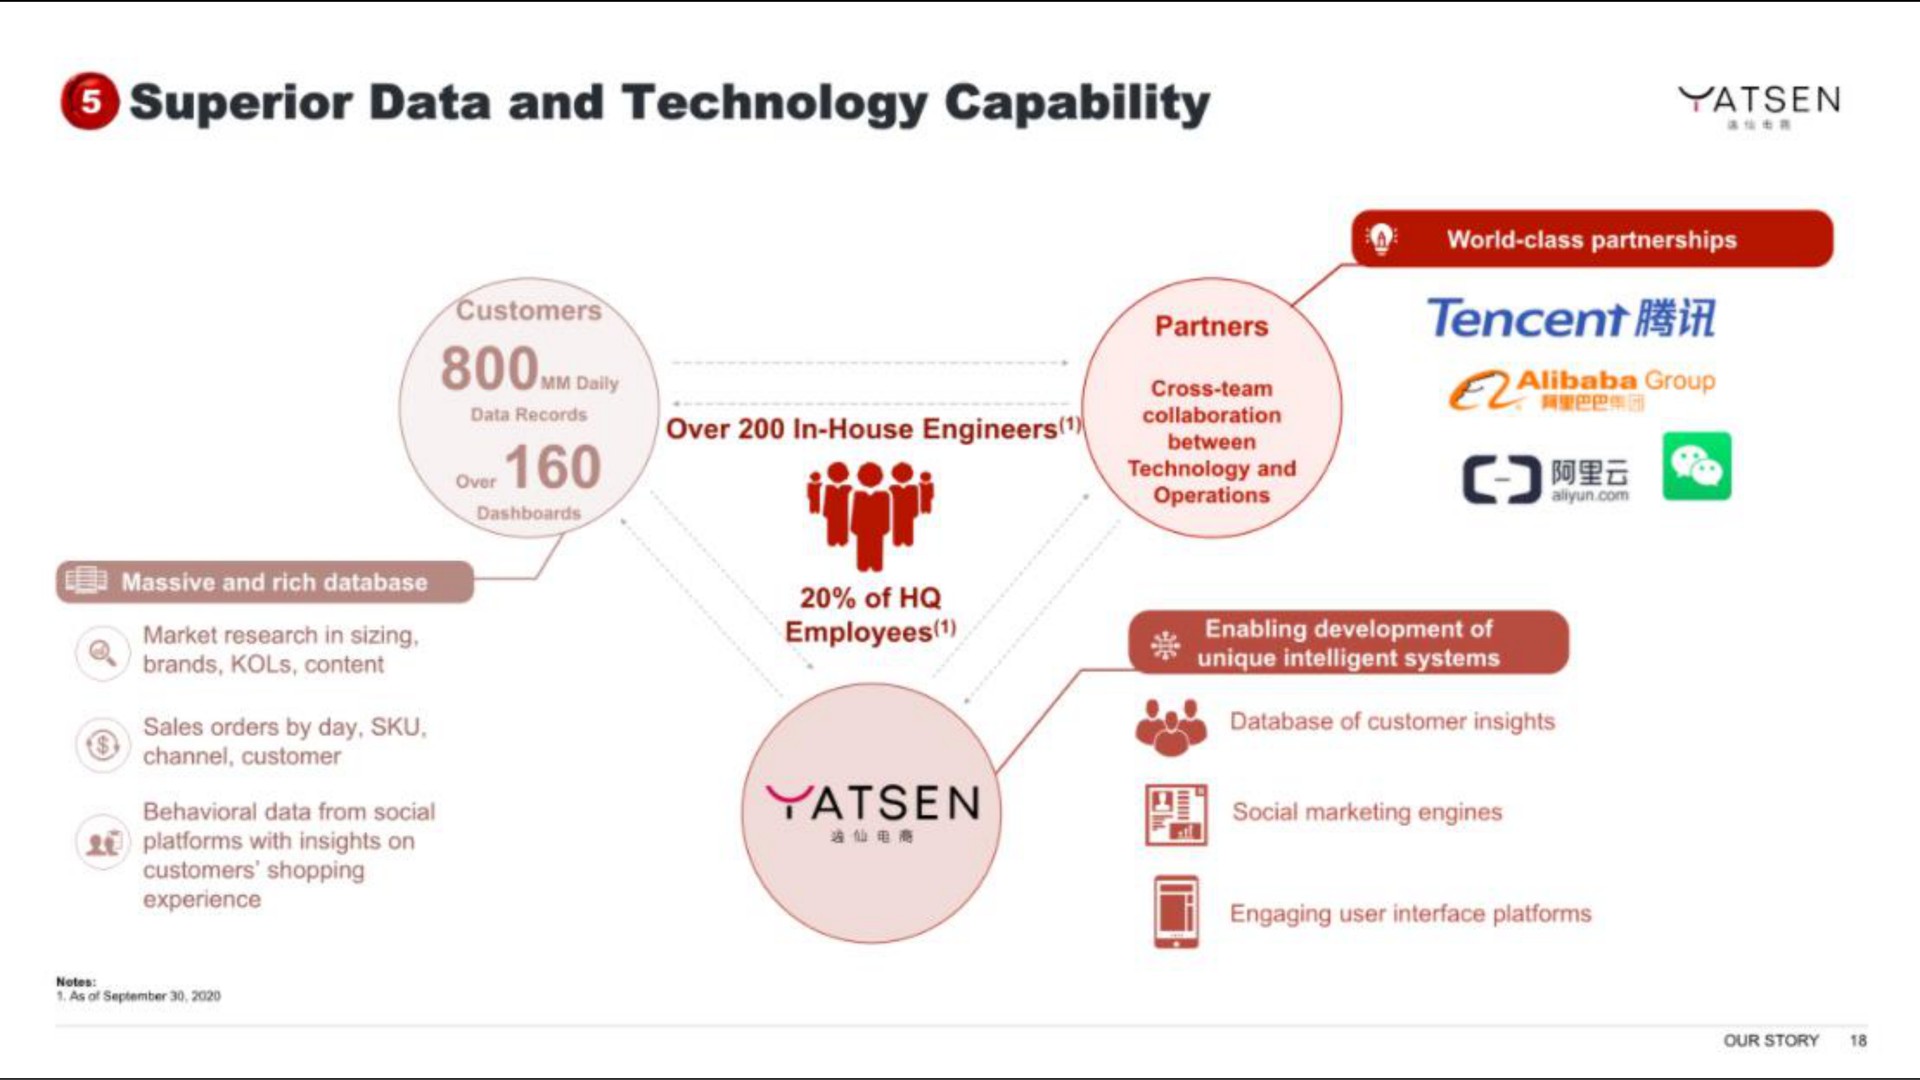 superior data and technology capability | Yatsen